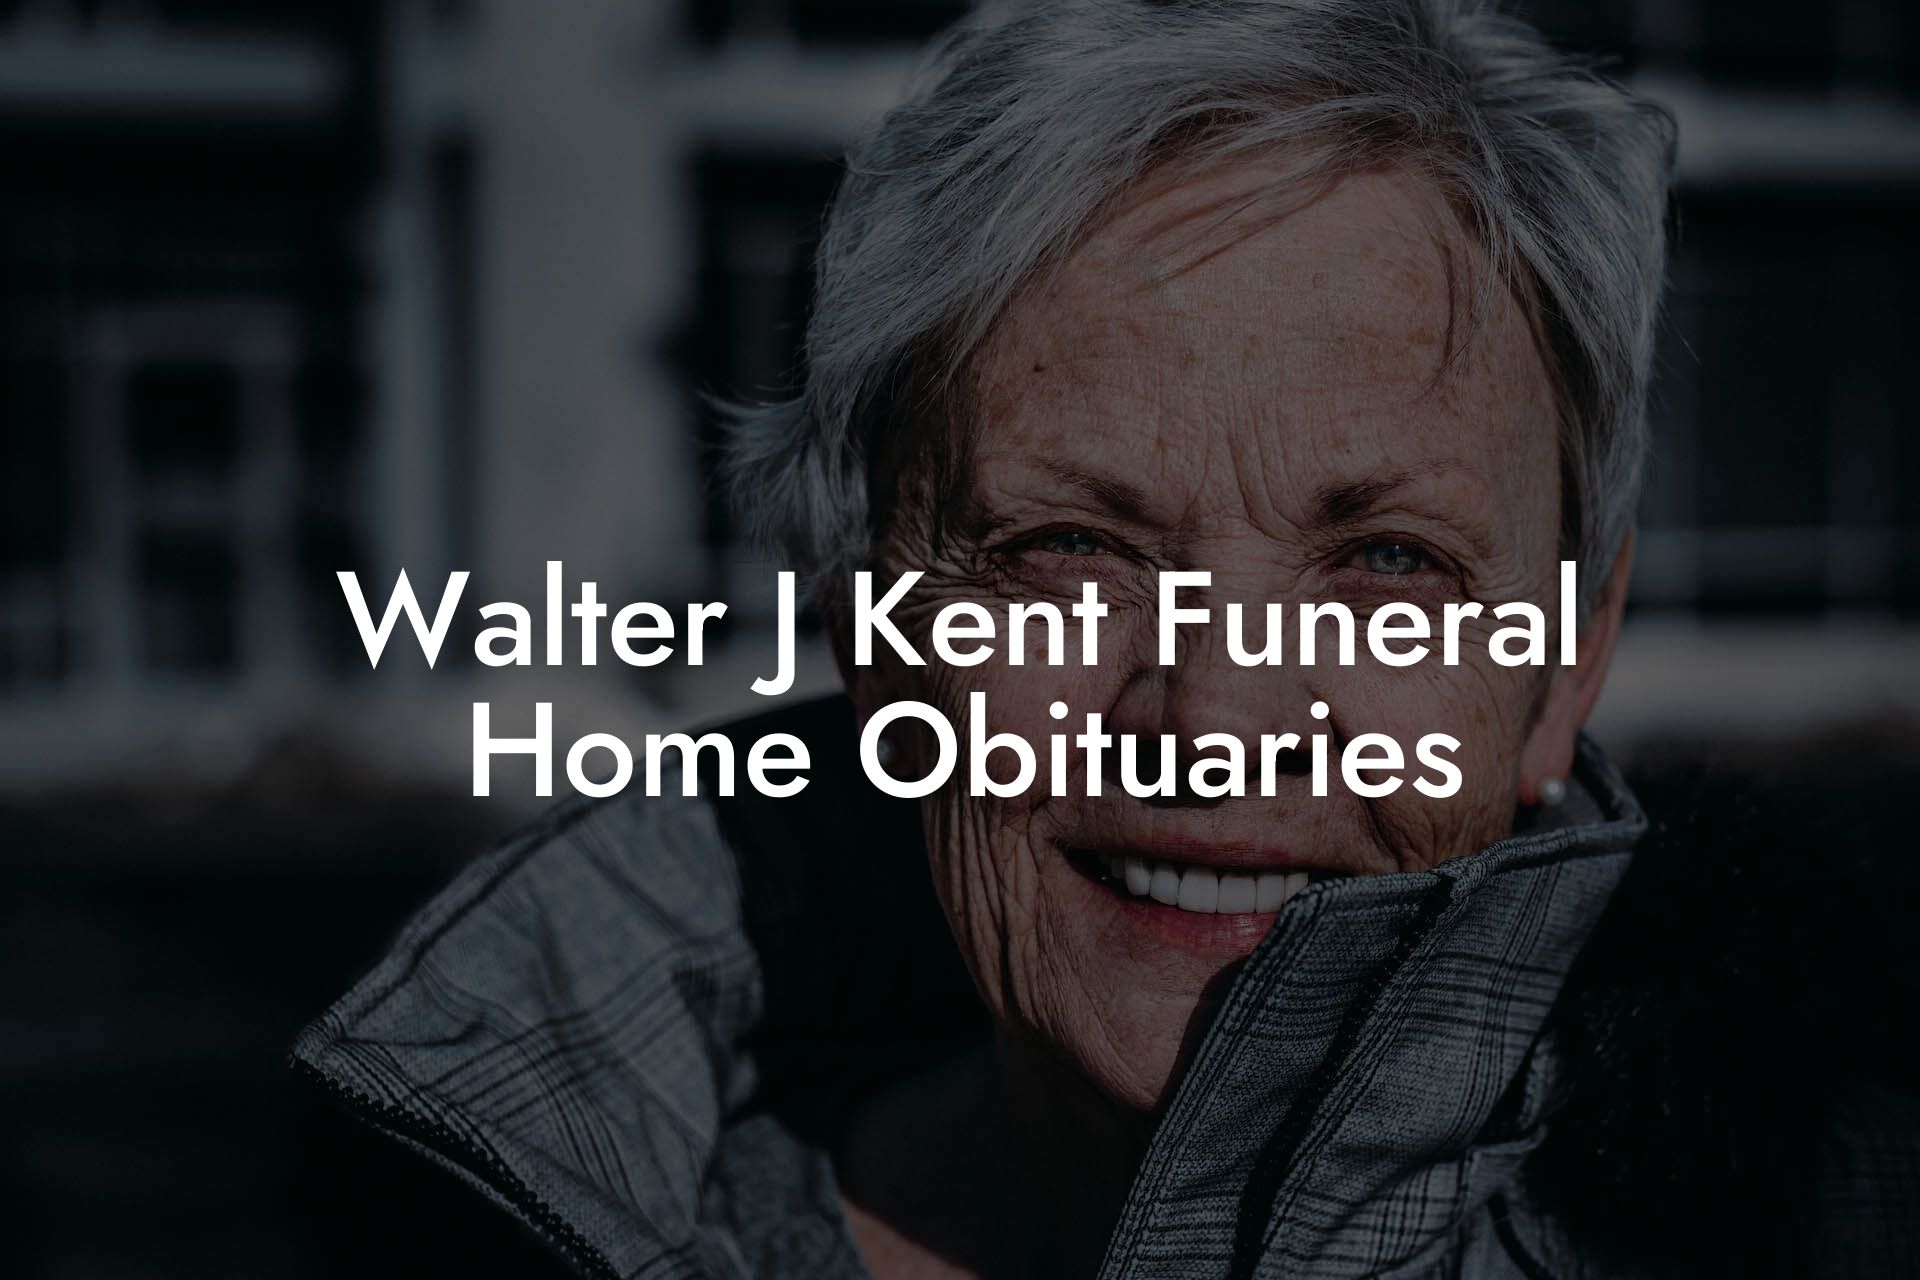 Walter J Kent Funeral Home Obituaries